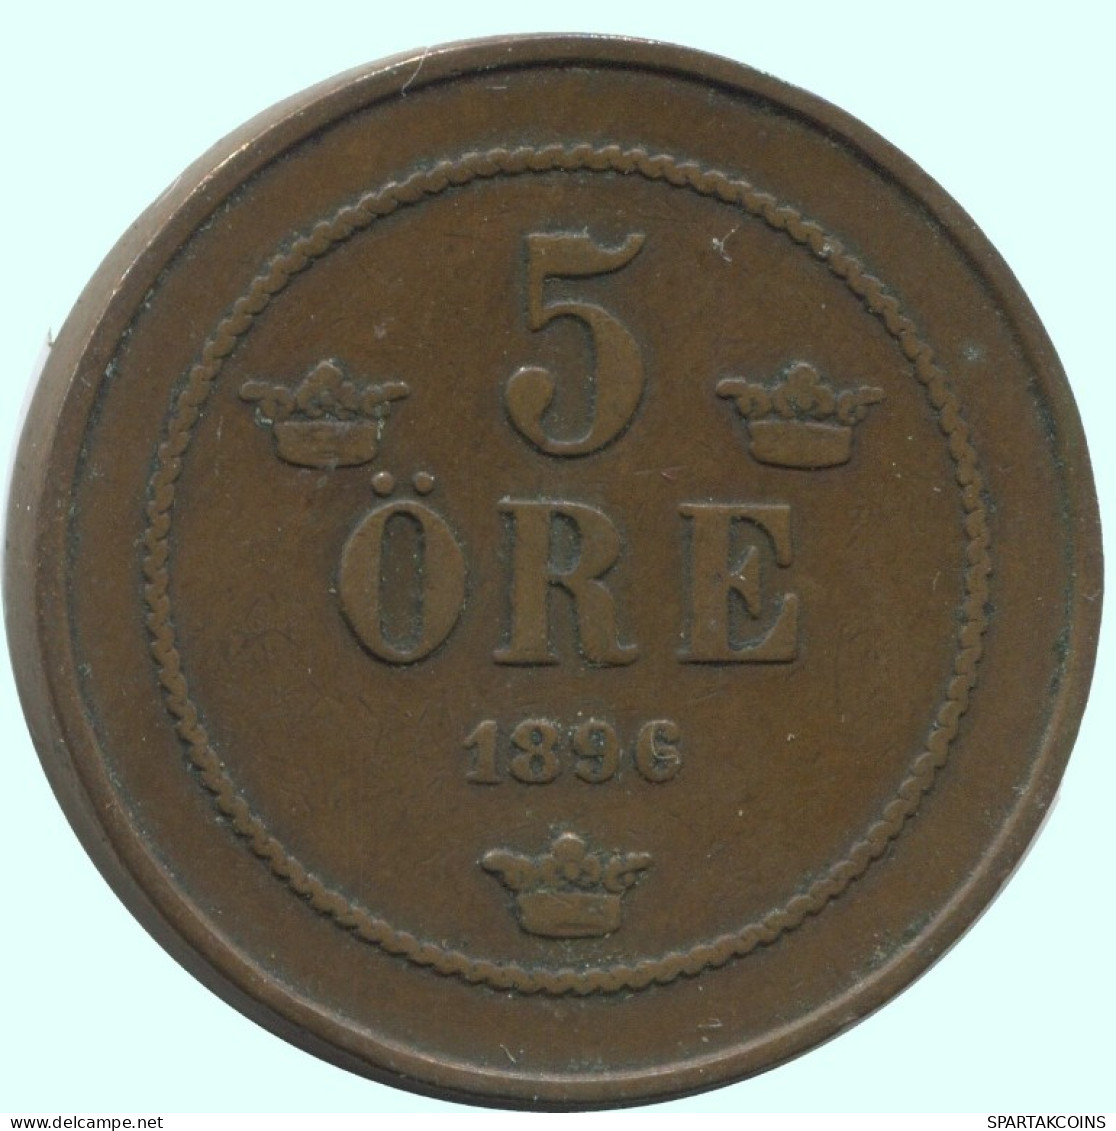 5 ORE 1891 SCHWEDEN SWEDEN Münze #AC650.2.D.A - Suecia